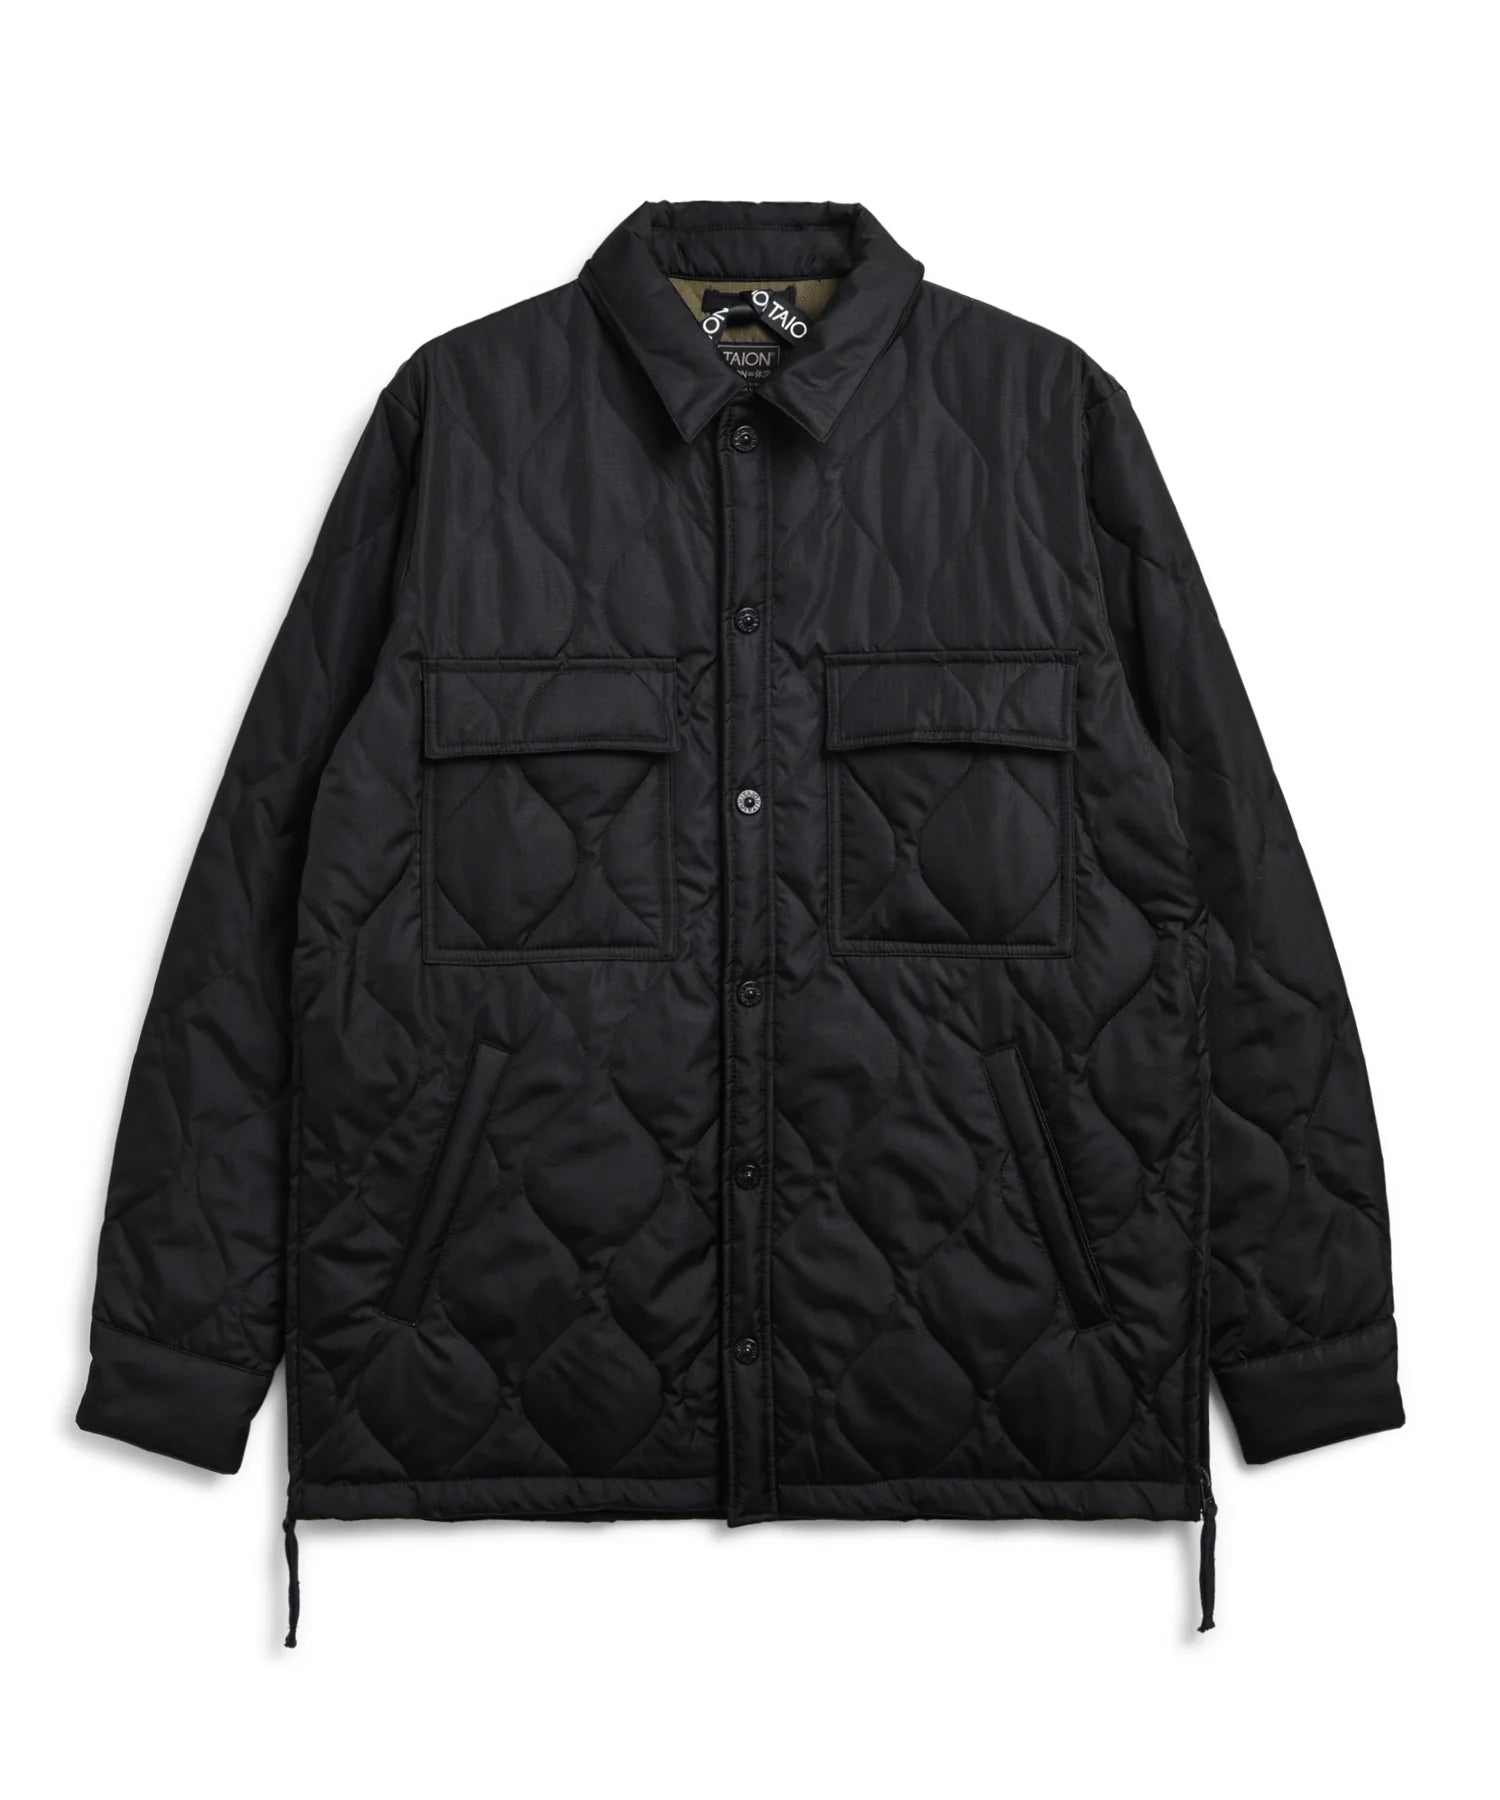 Taion Military Shirt Jacket - Black